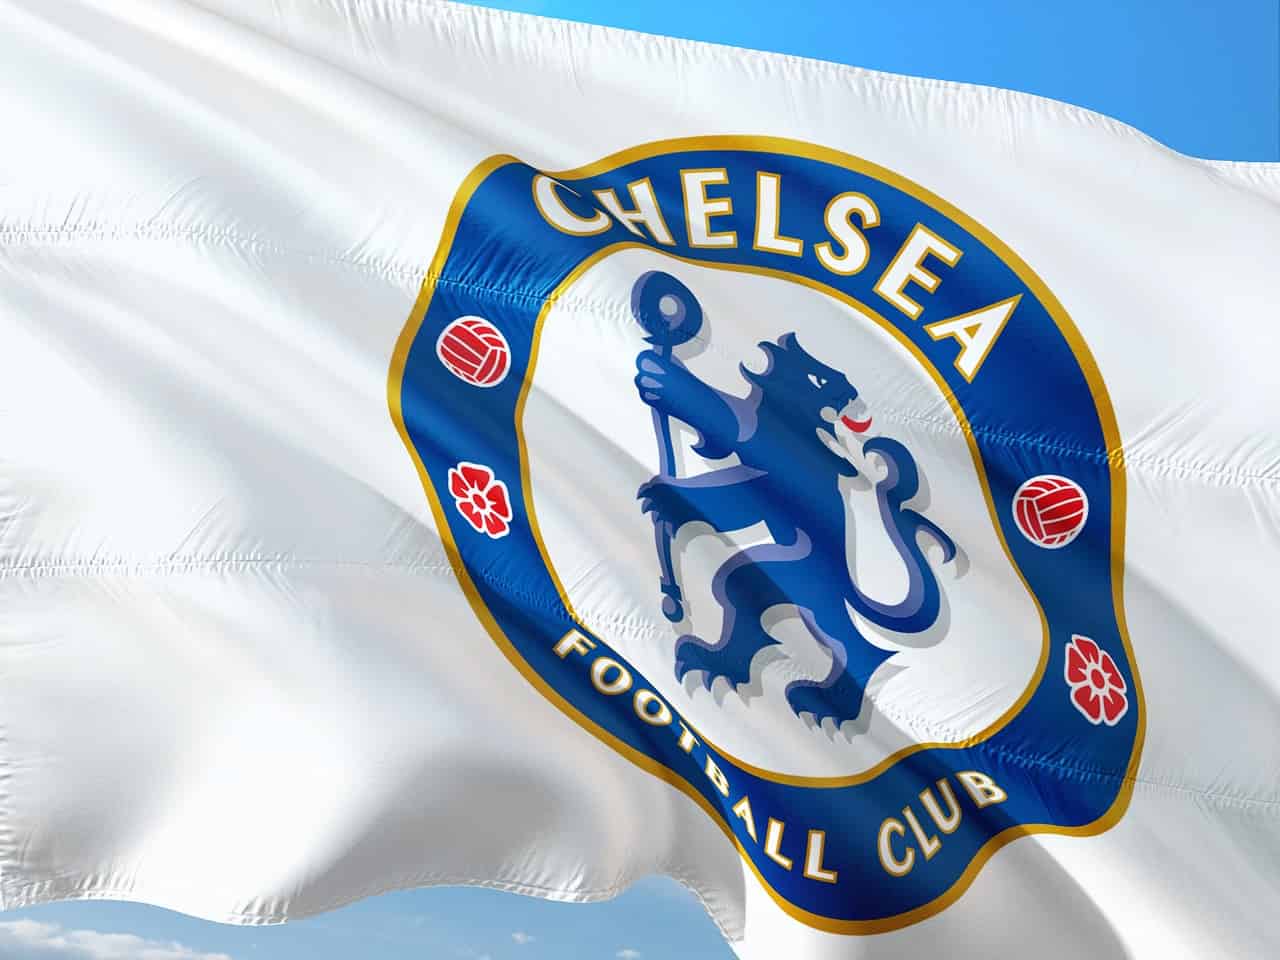 The flag of Chelsea FC, the team playing at Stamford Bridge. Image Source: Pixabay user Jorono.